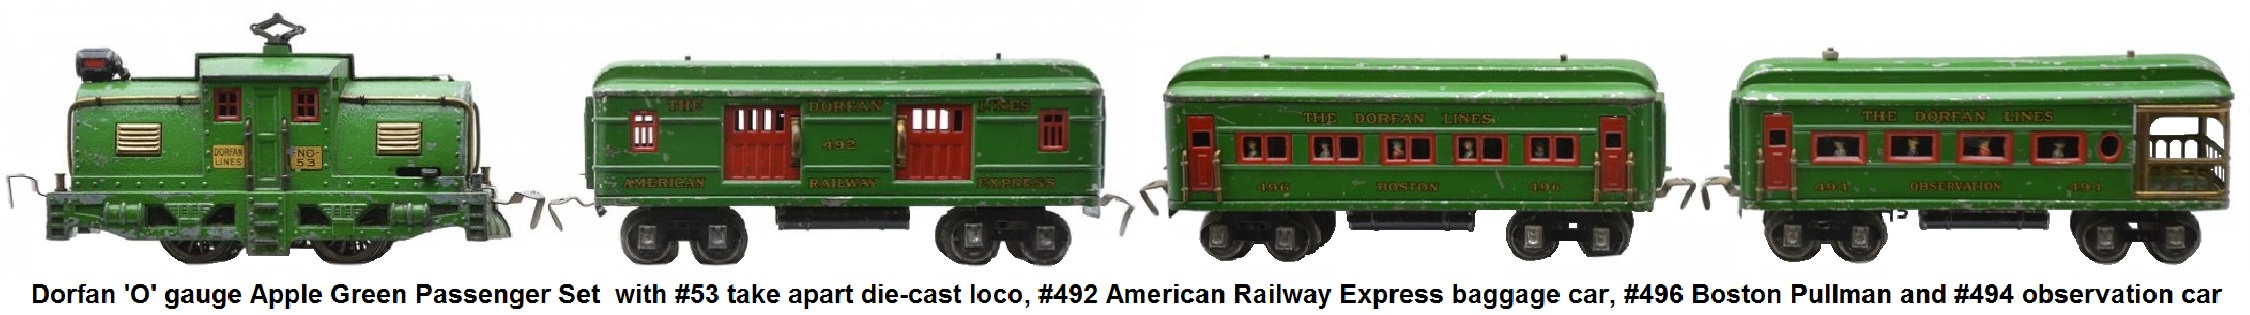 Dorfan 'O' gauge Apple Green #275 Manhattan limited Passenger Set with #53 take apart die-cast locomotive, #492 baggage, #496 Boston Pullman and #494 observation circa 1929